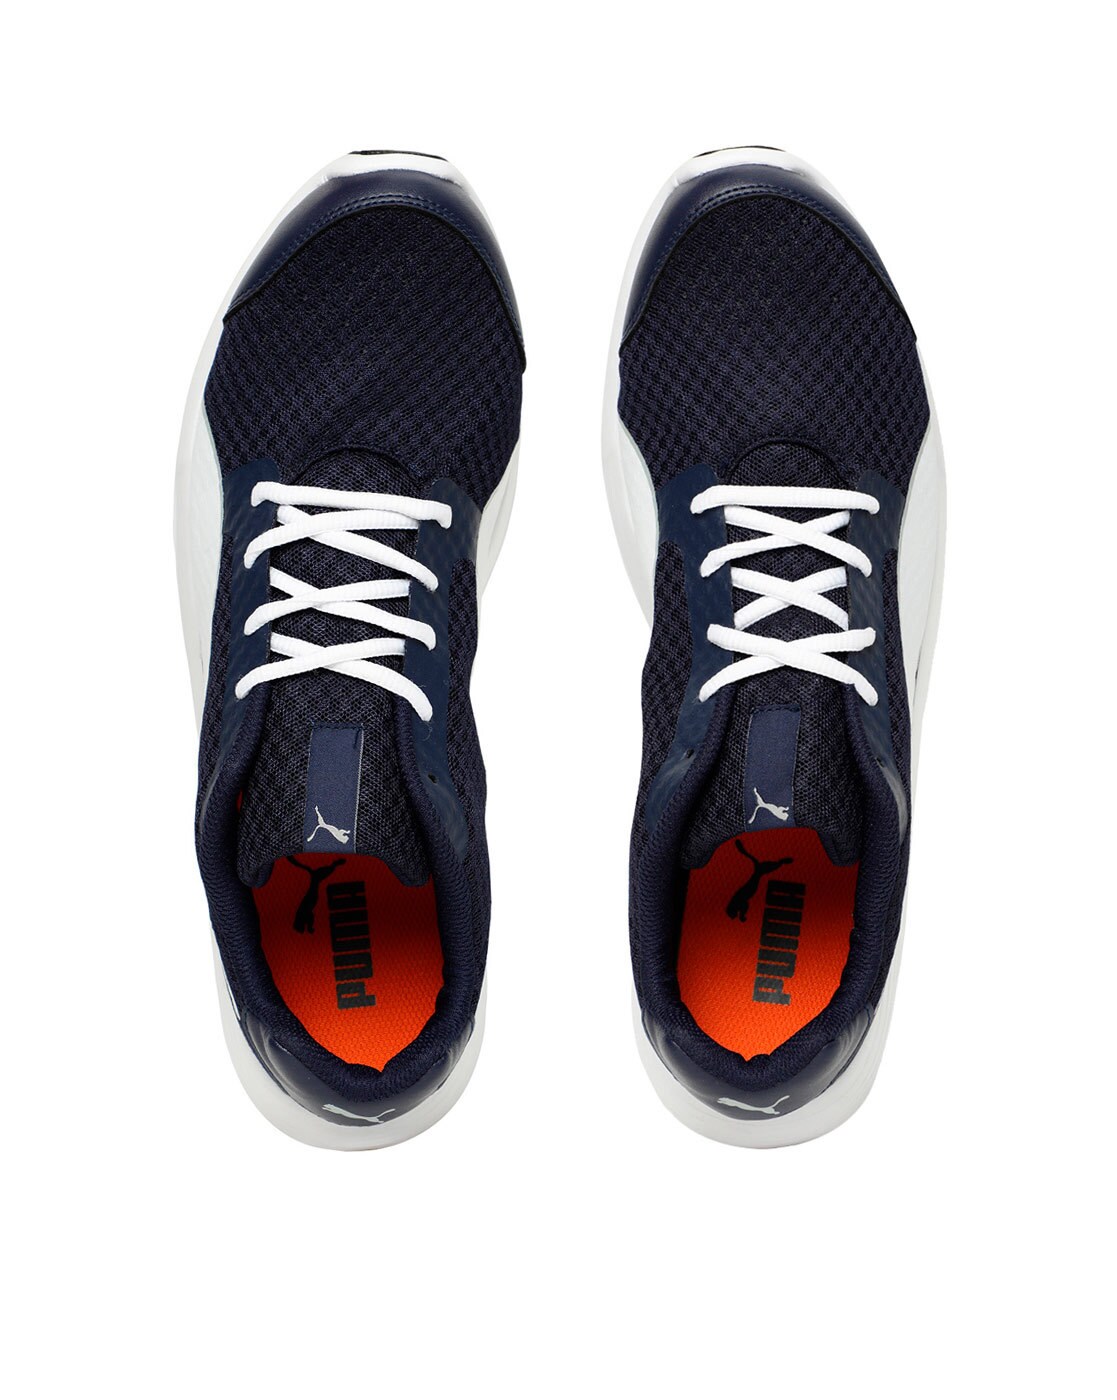 puma navy blue running shoes